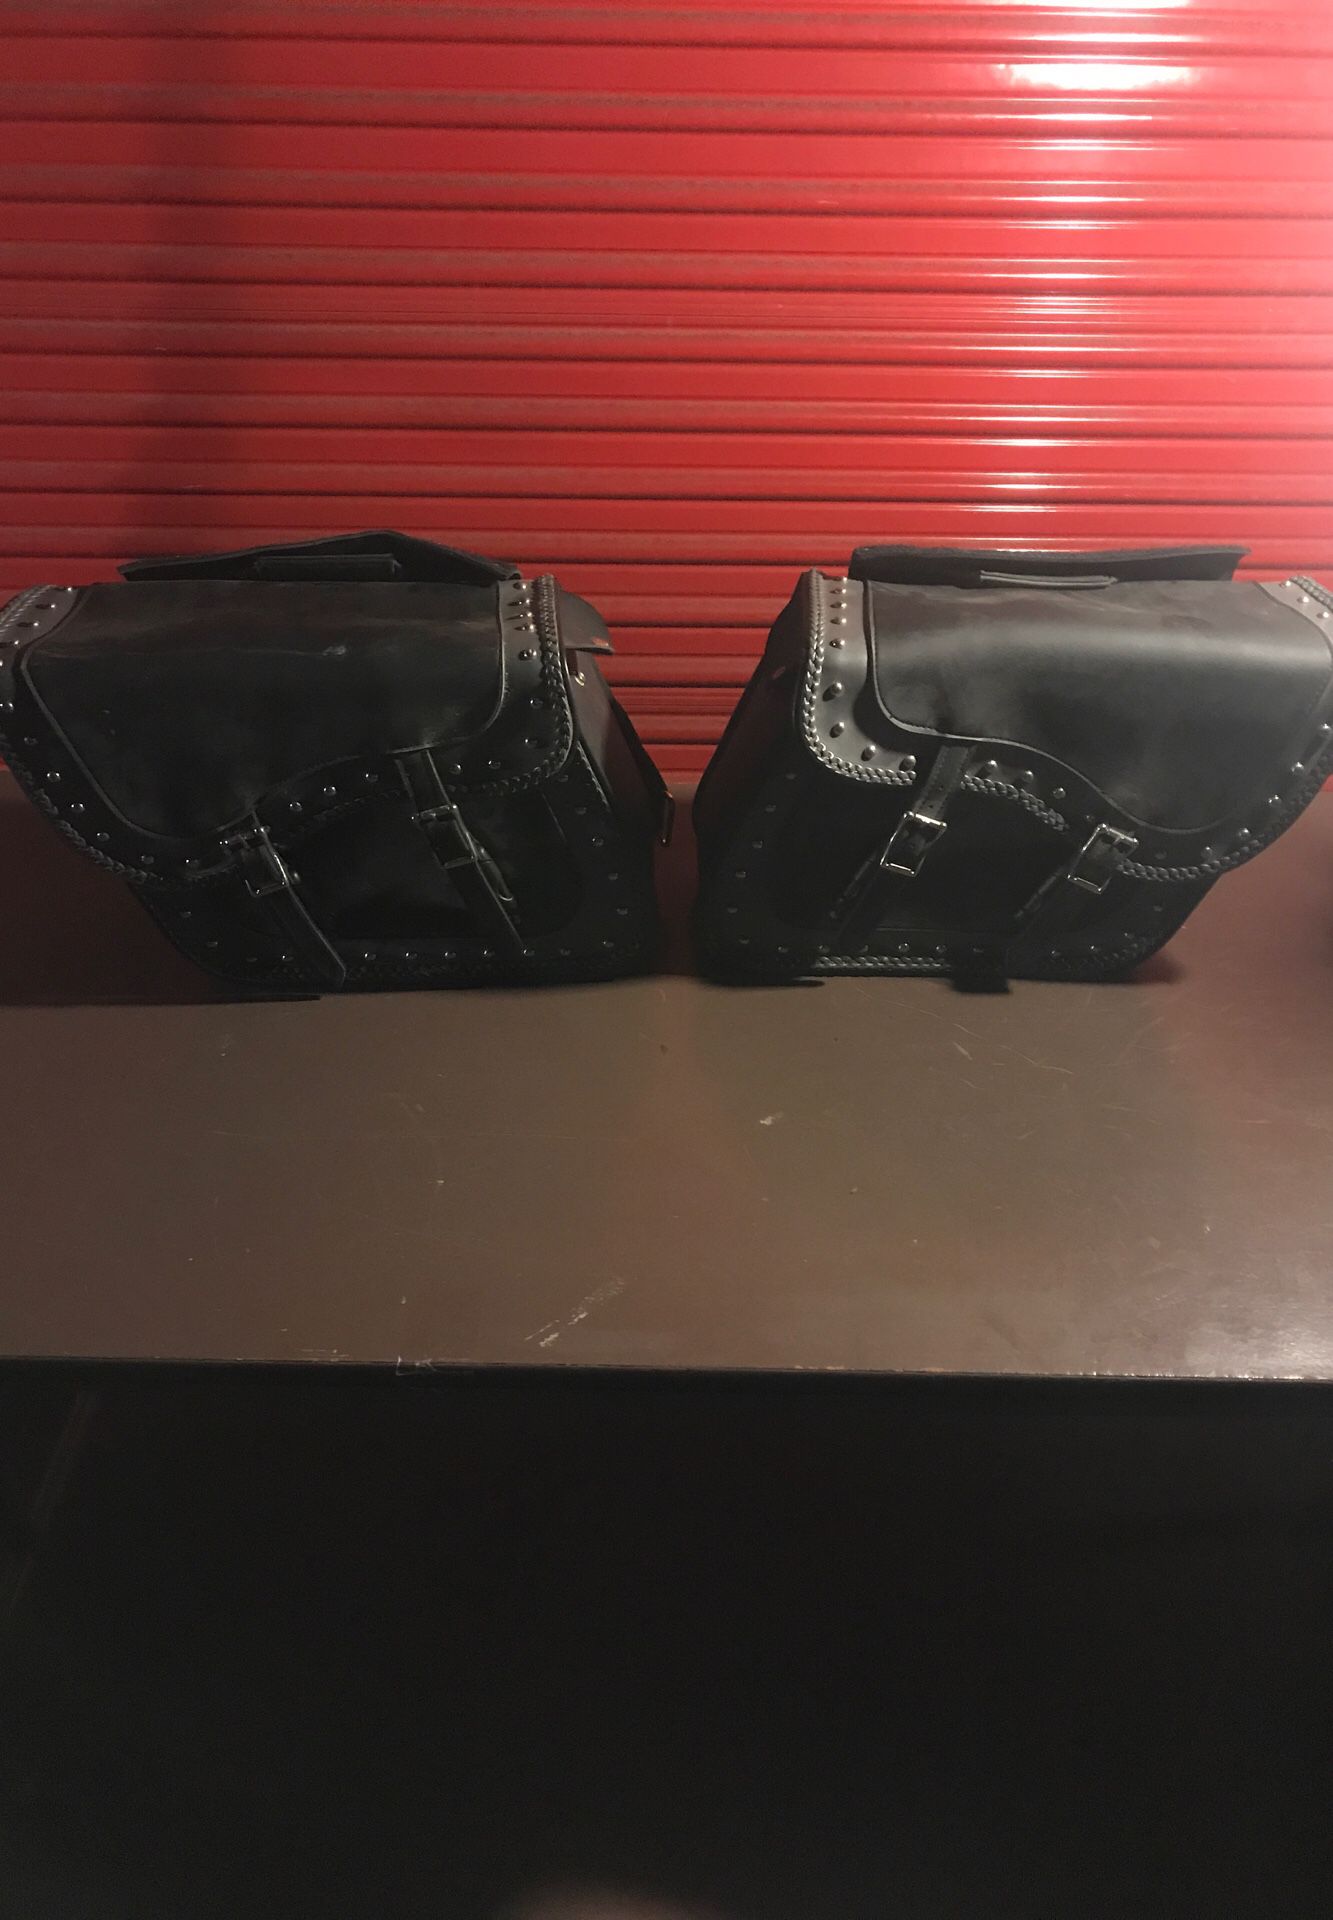 Leather saddle bags